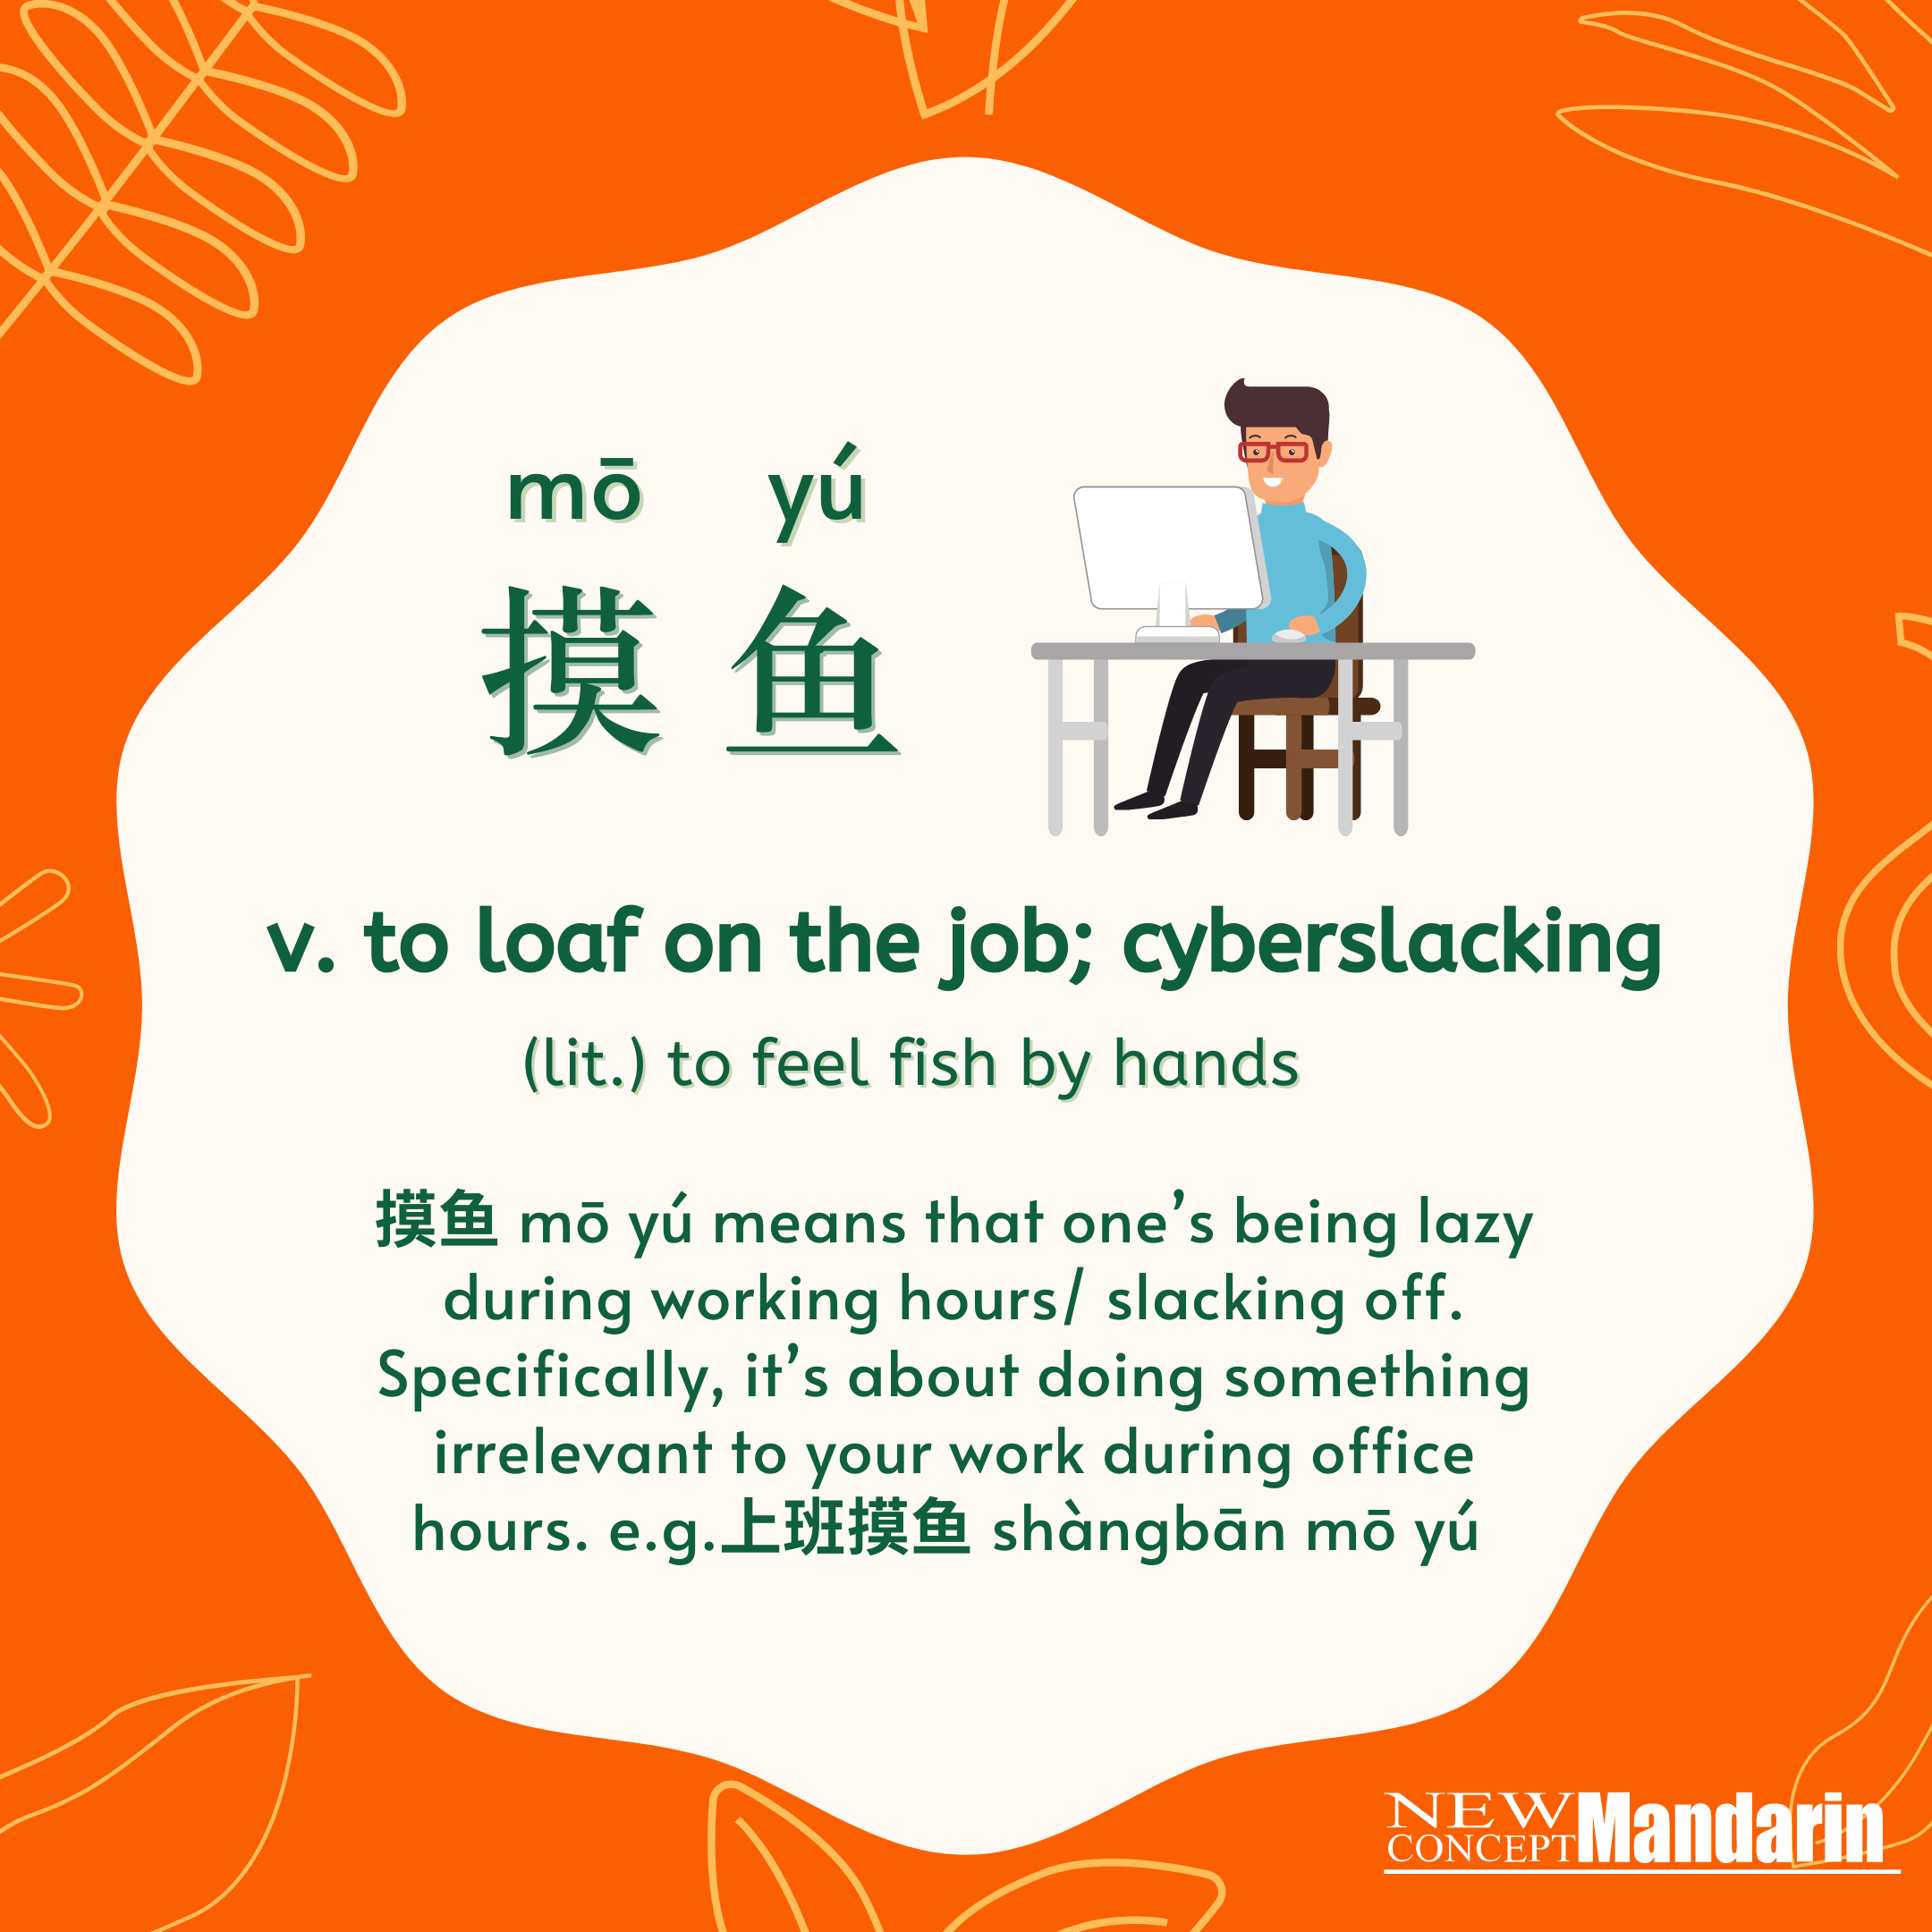 摸鱼 mō yú to loaf on the job; cyberslacking lit. to feel fish by hands: 摸鱼mō yú originally refers to the idiom 